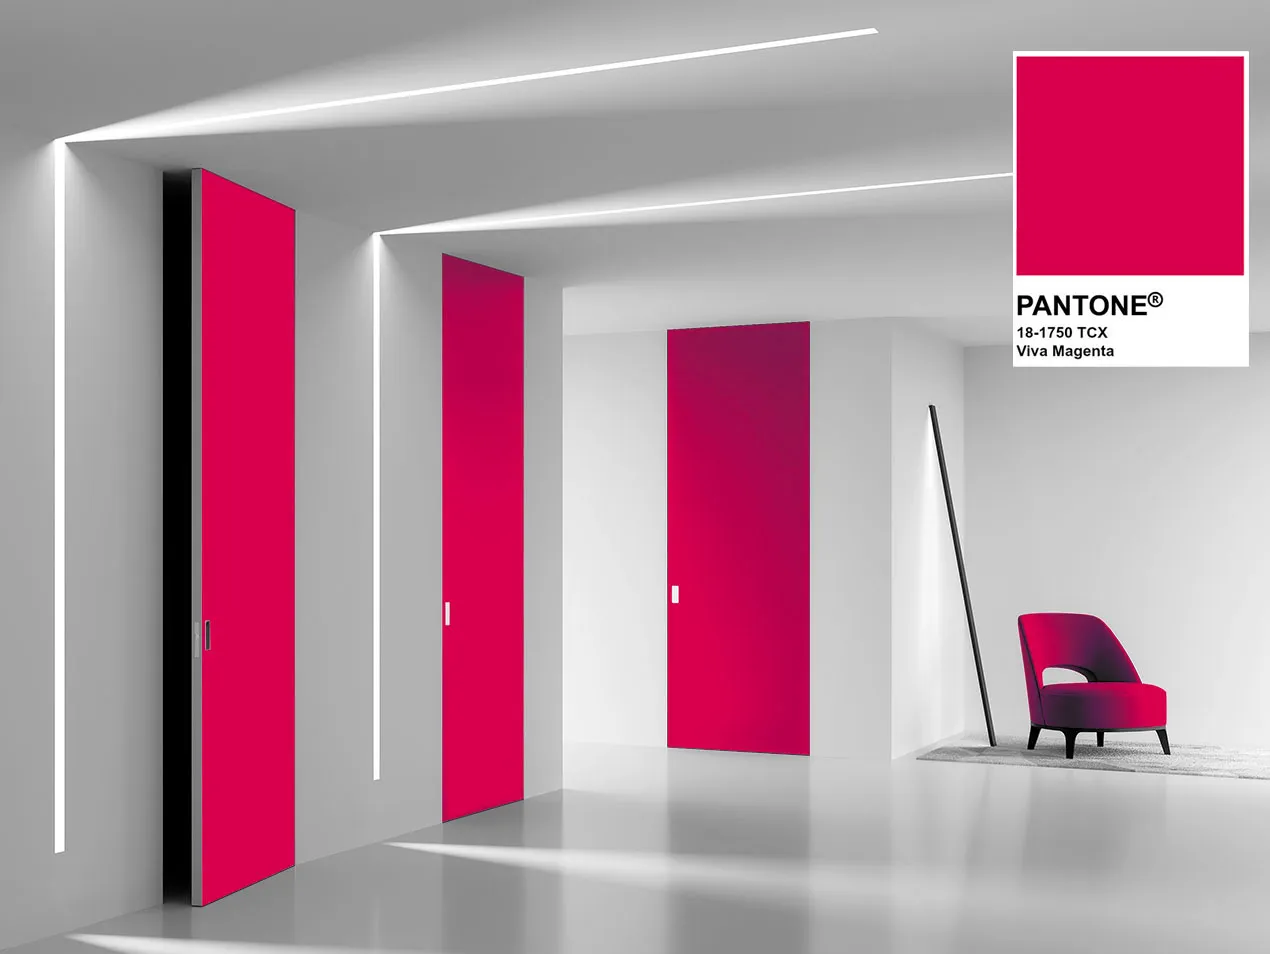 Viva Magenta: Pantone reveals the colour of the year 2023